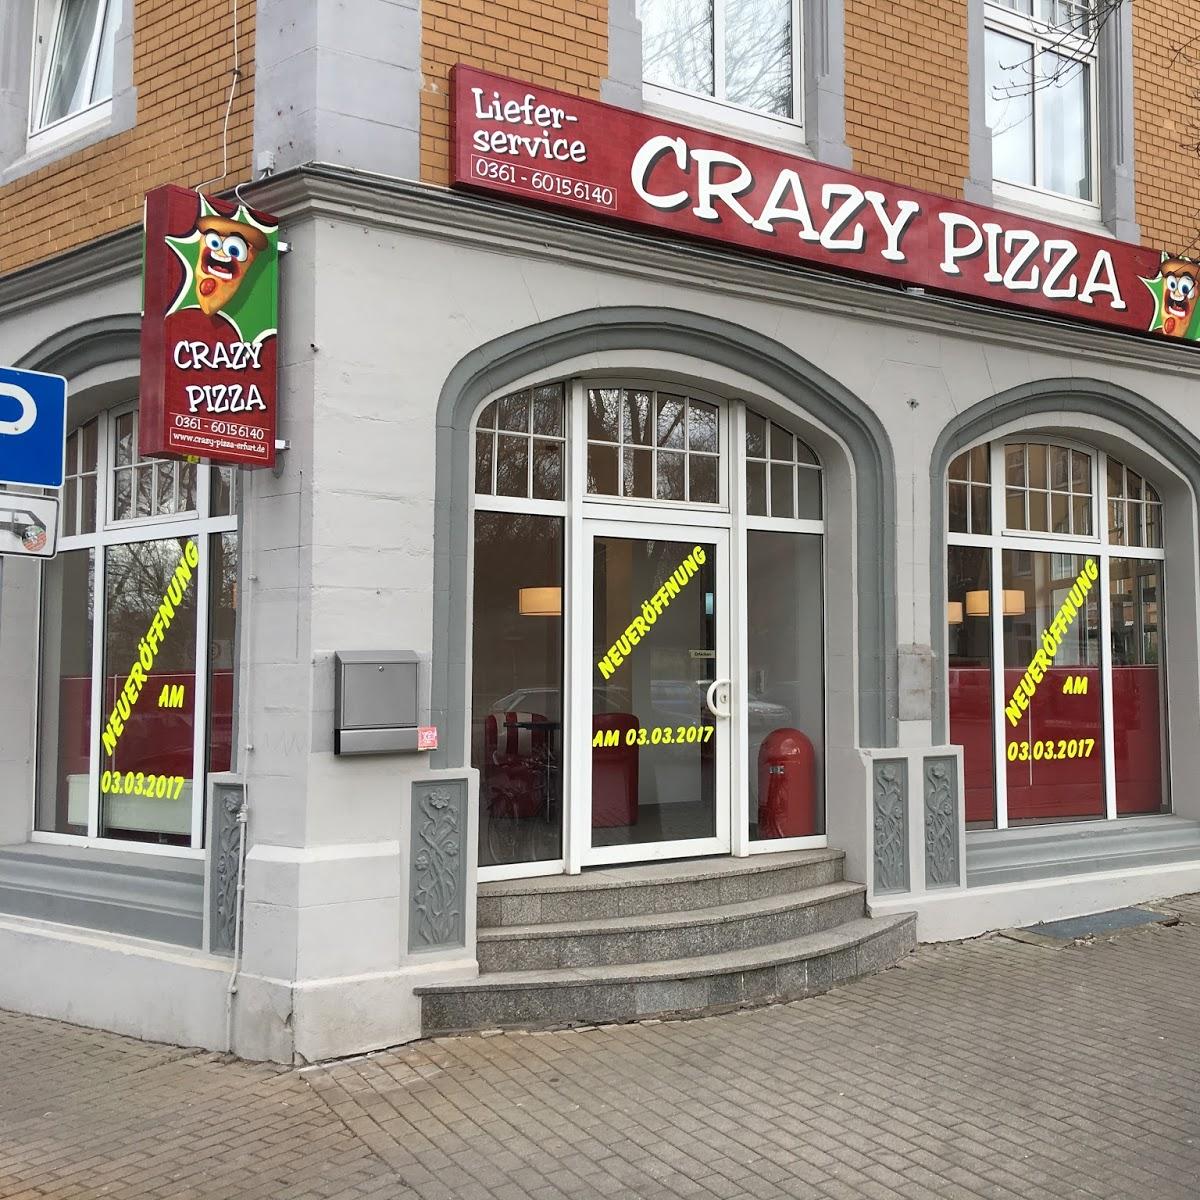 Restaurant "Crazy Pizza Home & Lieferservice" in Erfurt